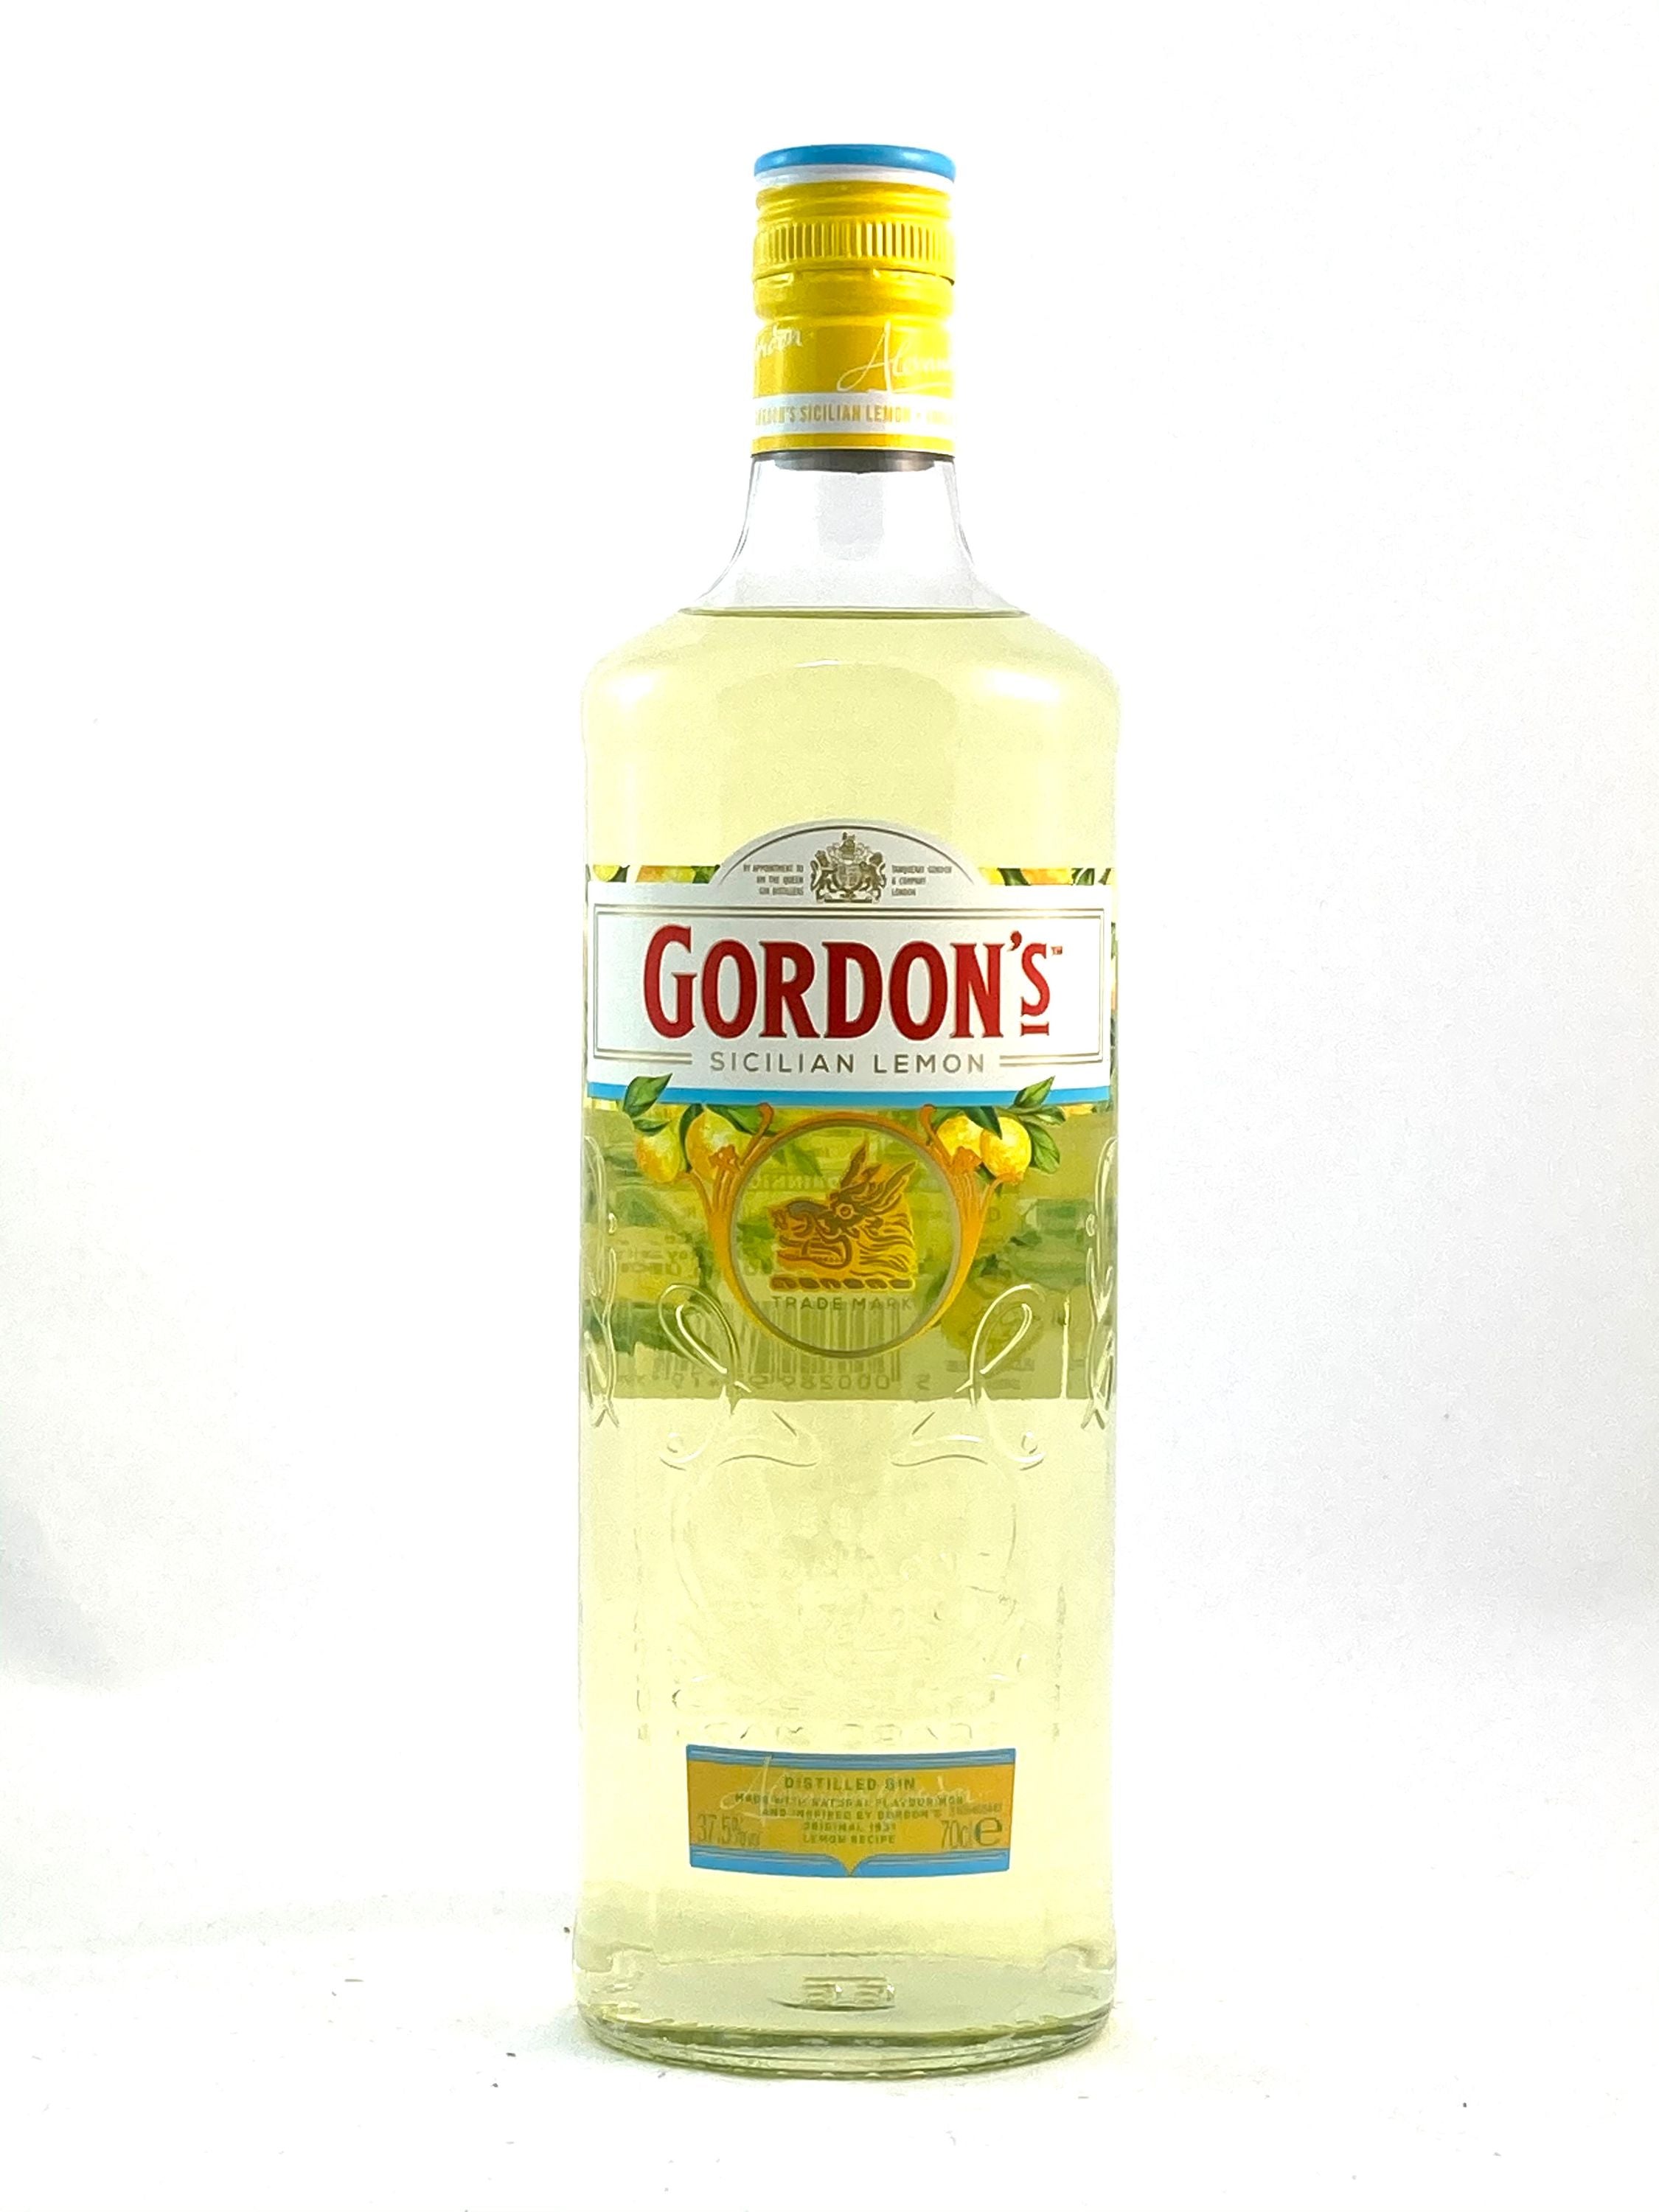 Gordon's Sicilian Lemon Gin 0.7l, alc. 37.5% ABV, Gin England